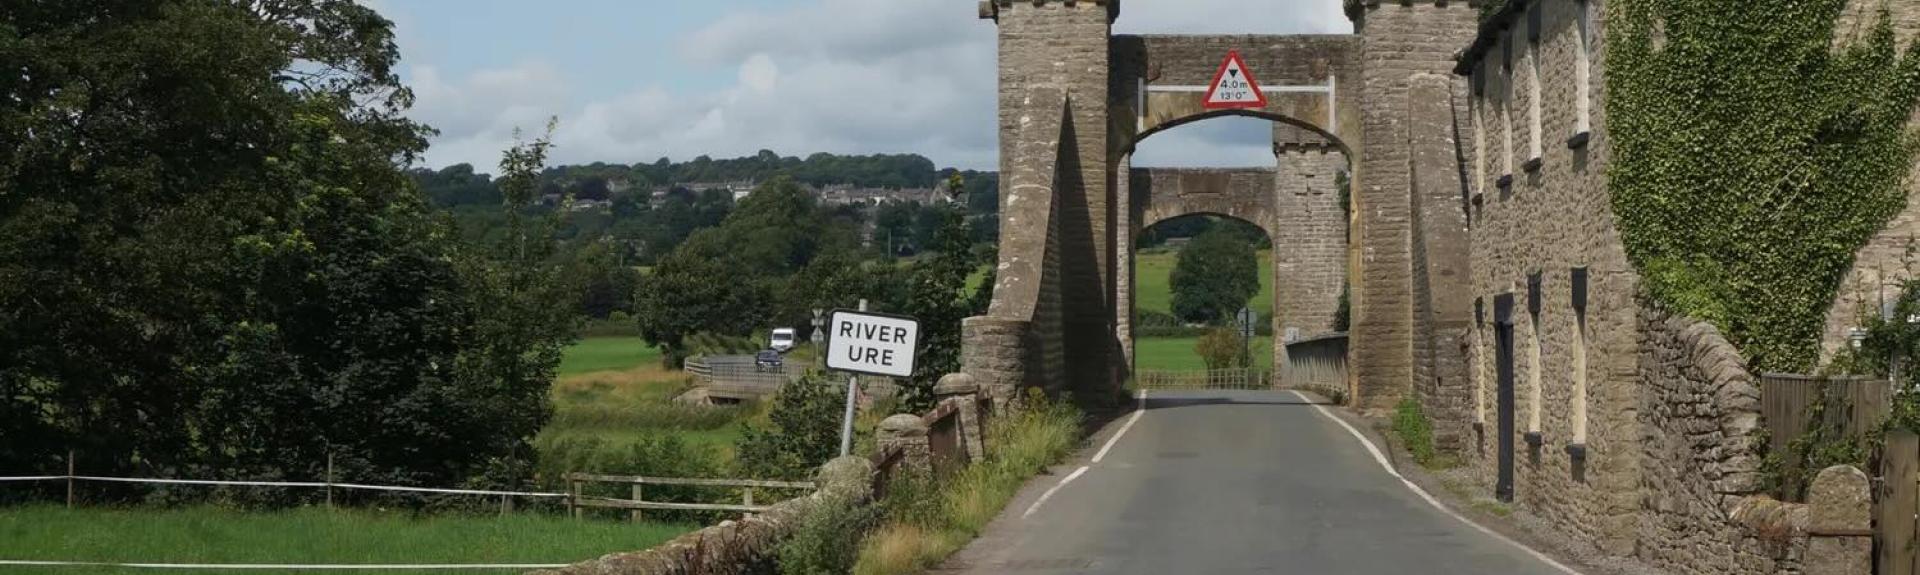 The road entering Leyburn runs under a stone-built arch.